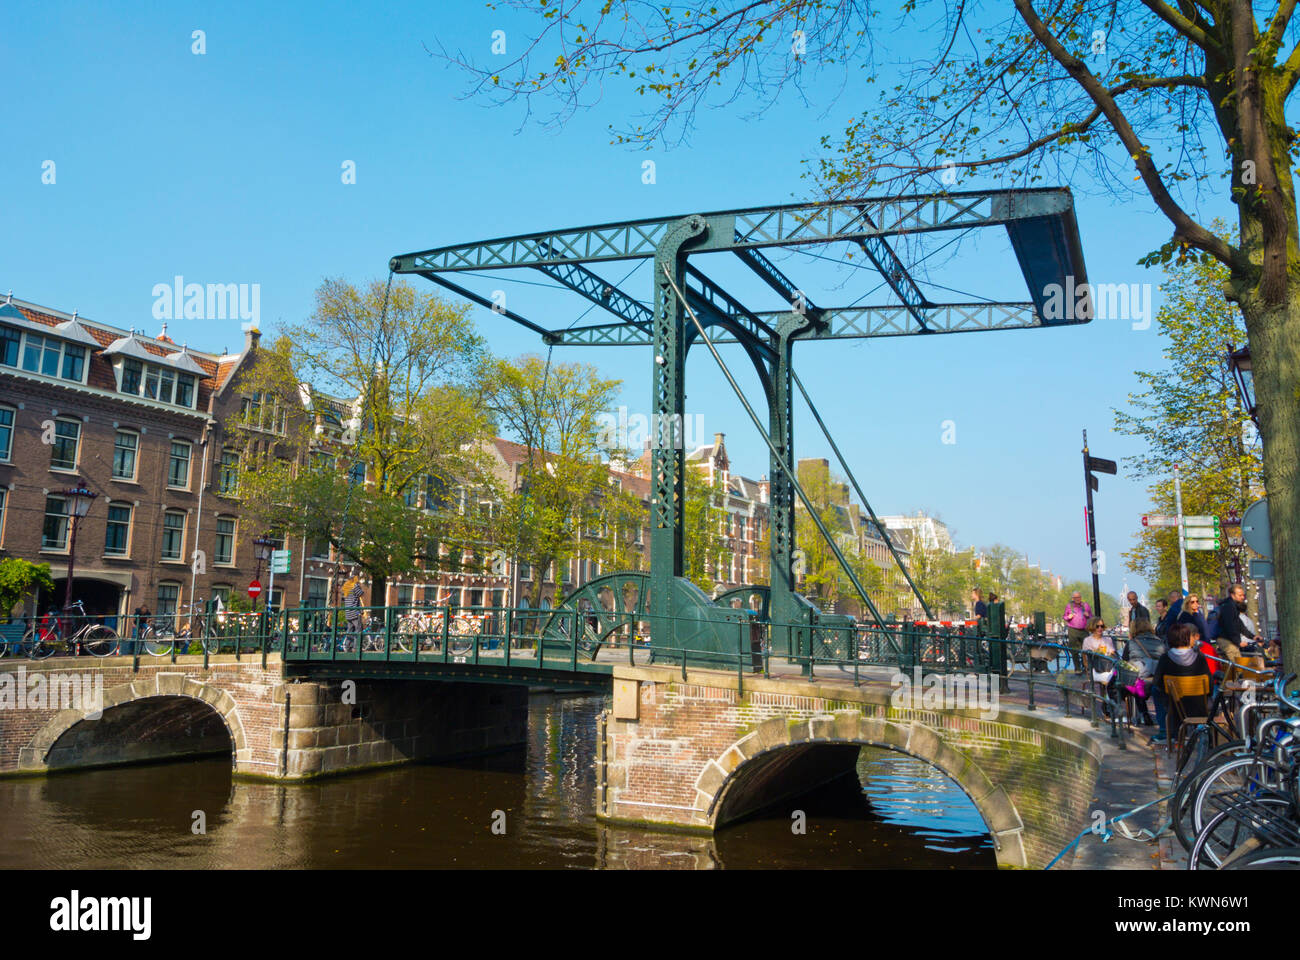 Aluminiumbrug, Aluminium bridge, draw bridge, from 1896, Amsterdam, The Netherlands Stock Photo